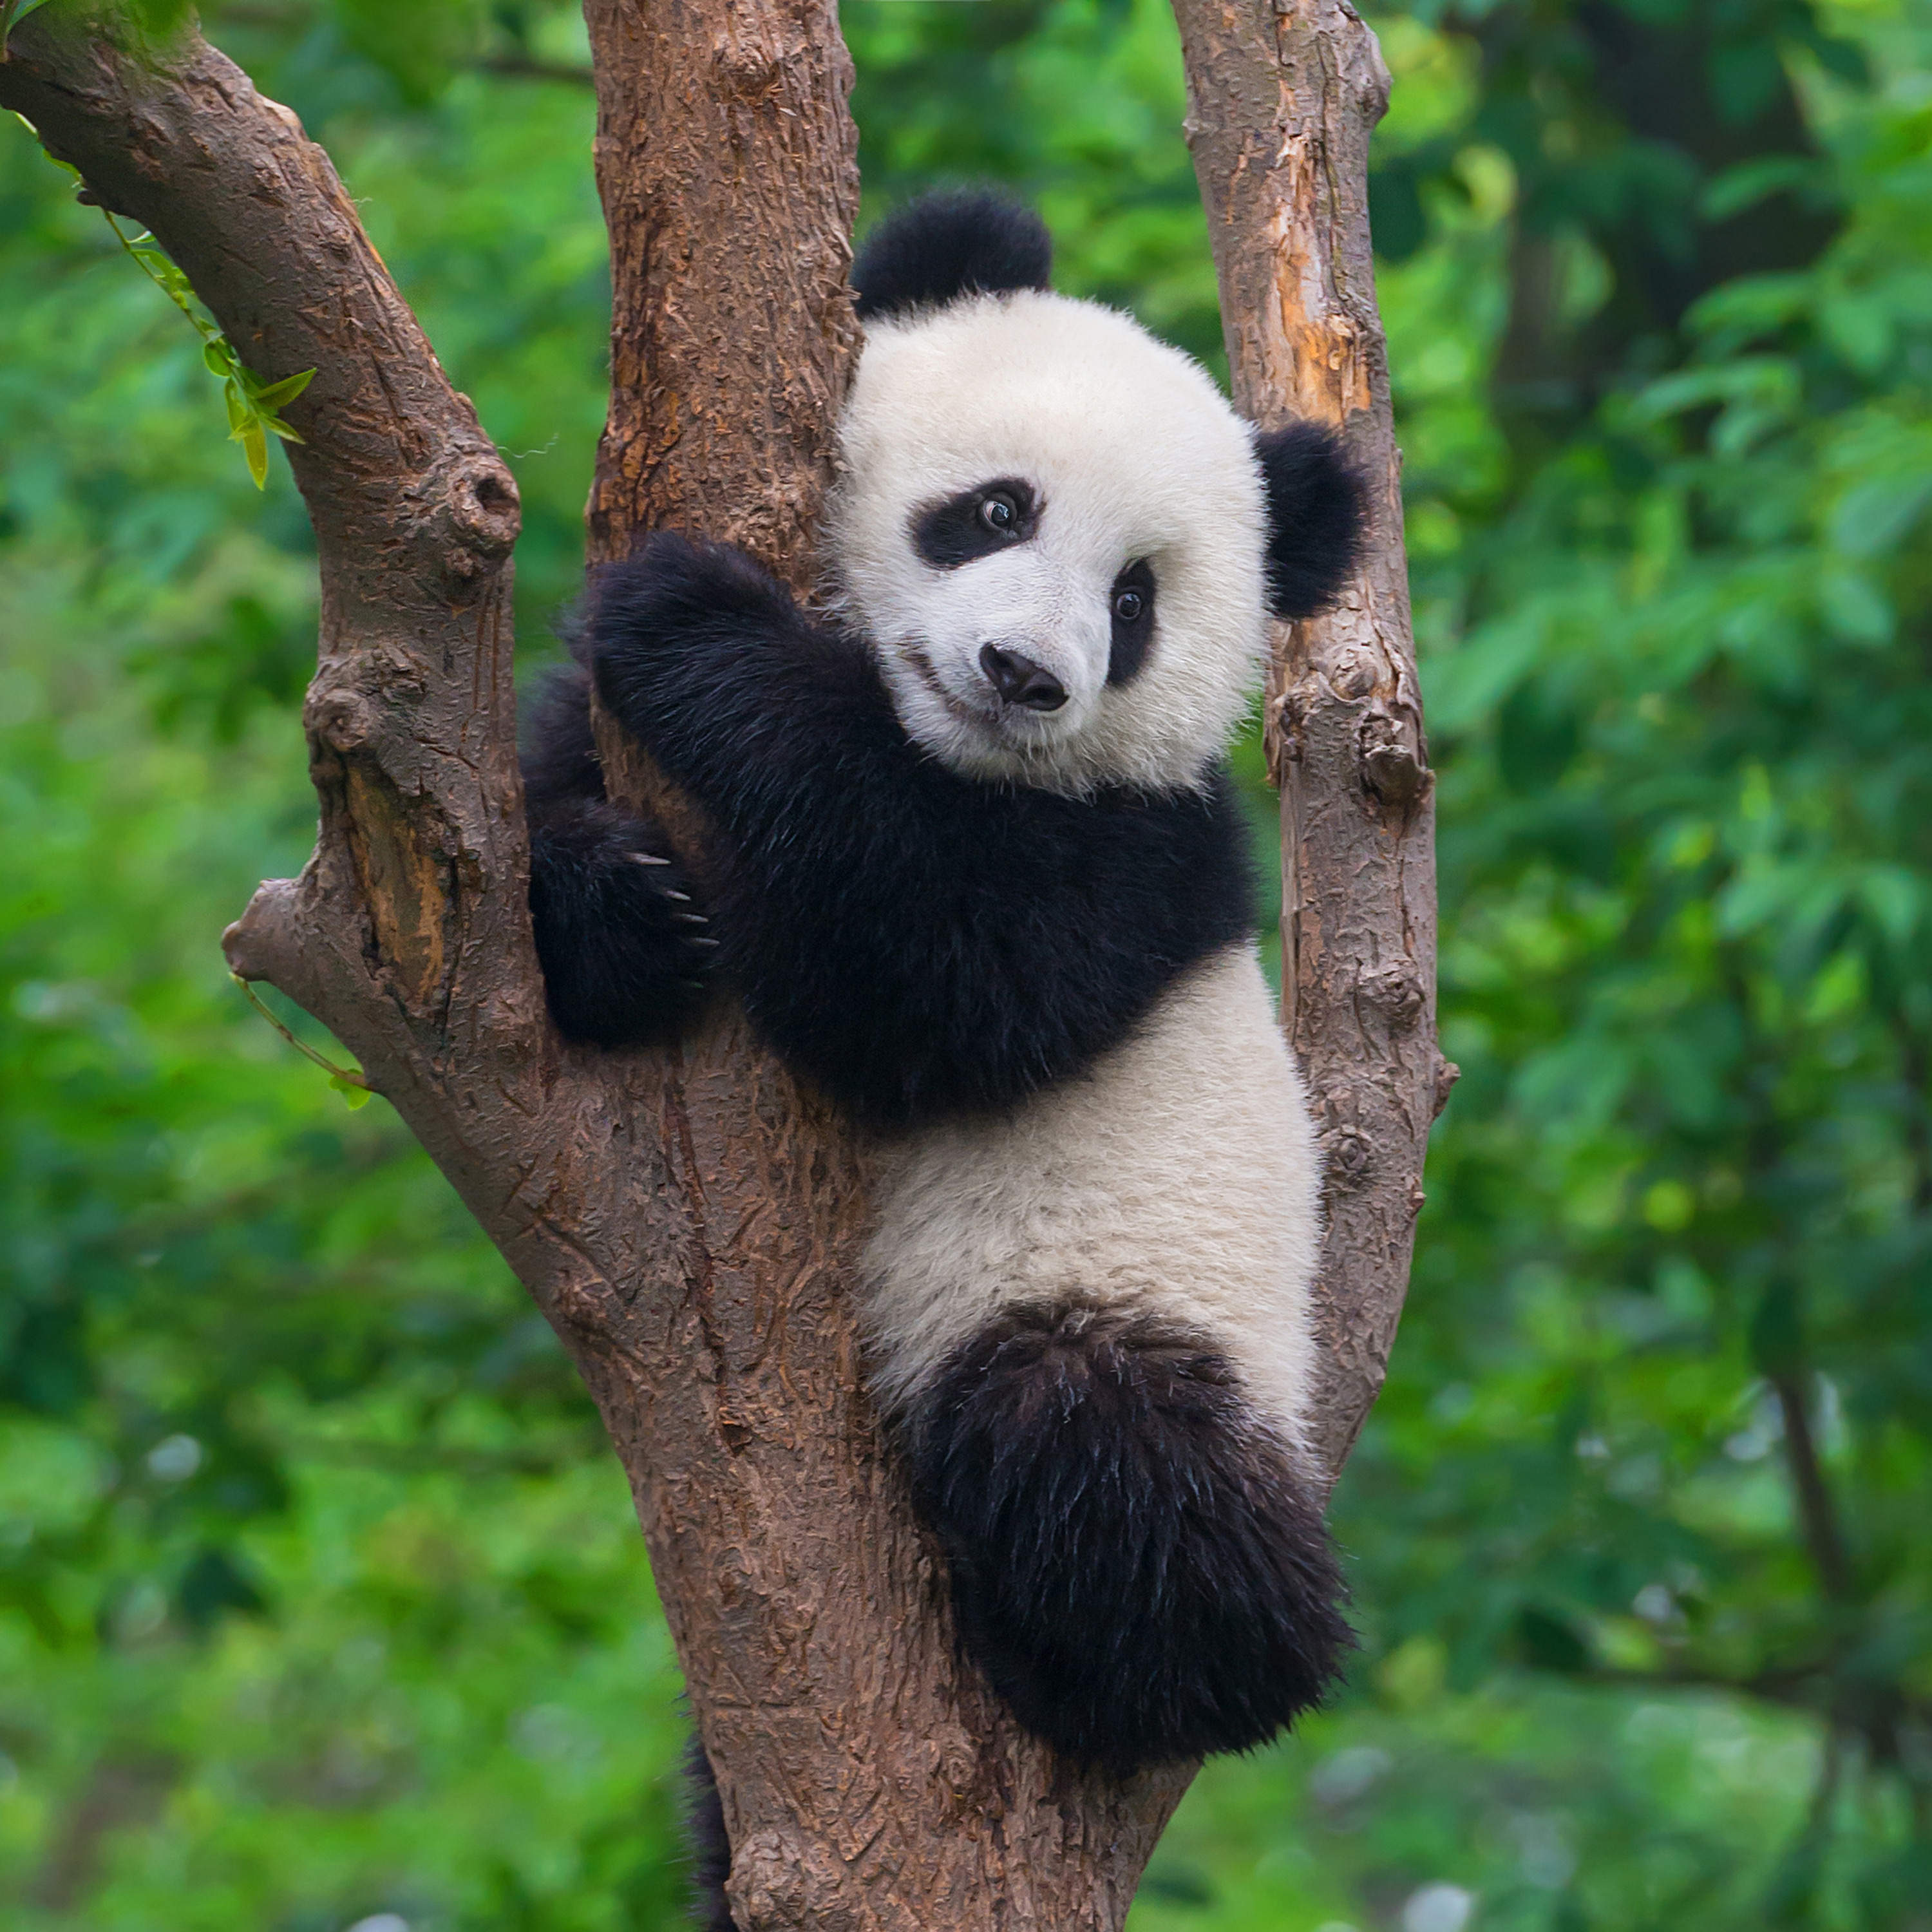 Panda in tree, china